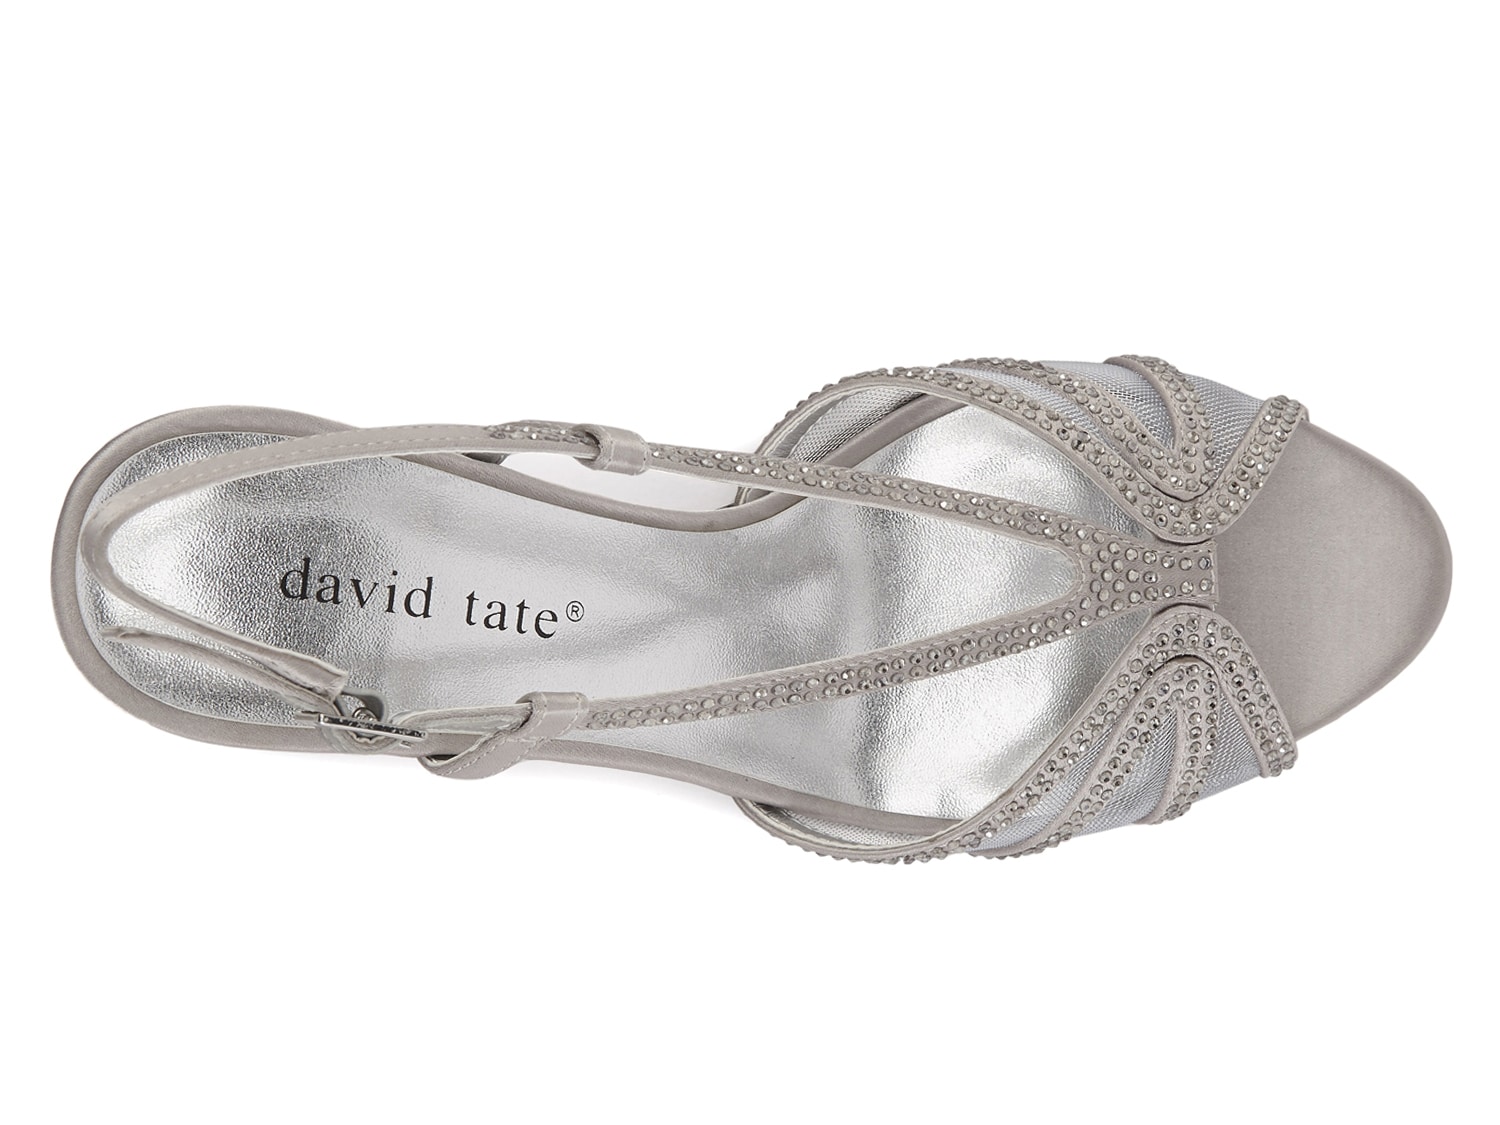 david tate silver sandals